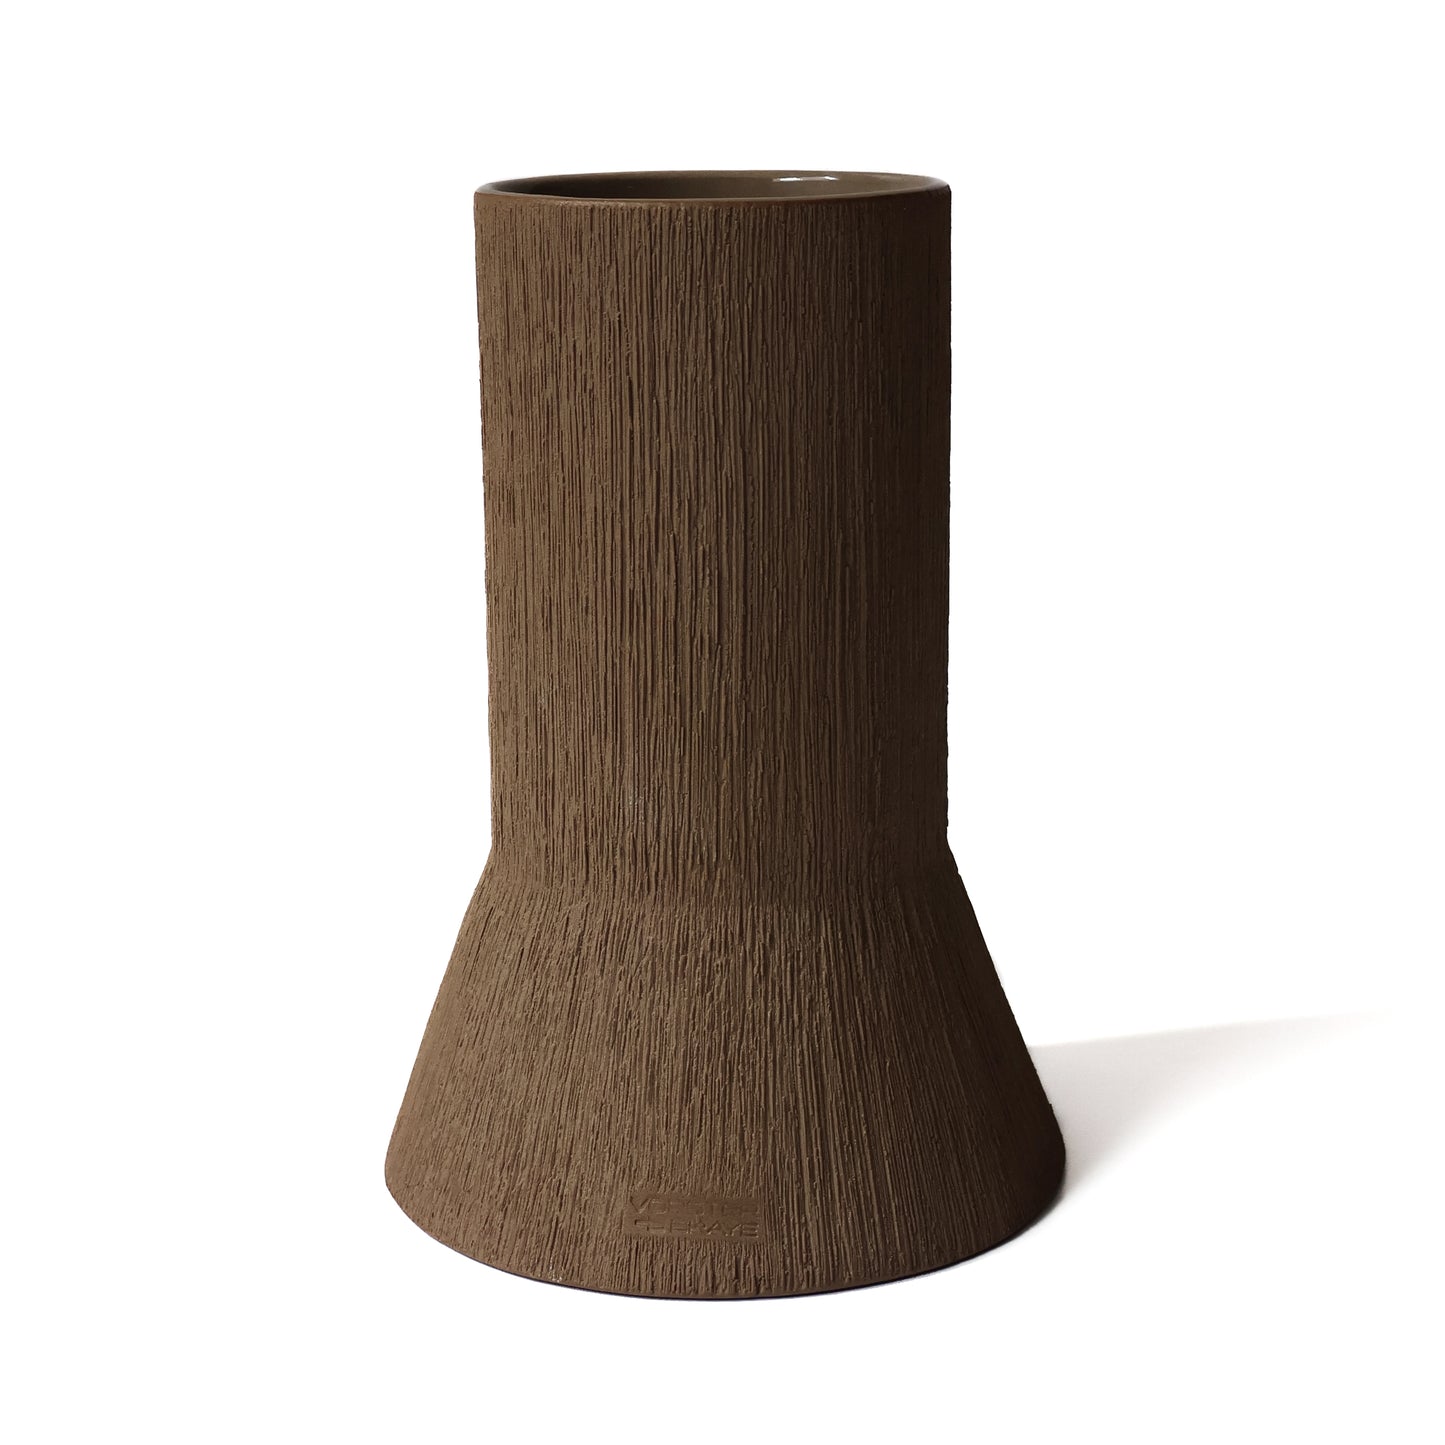 Restio Vase / Standard